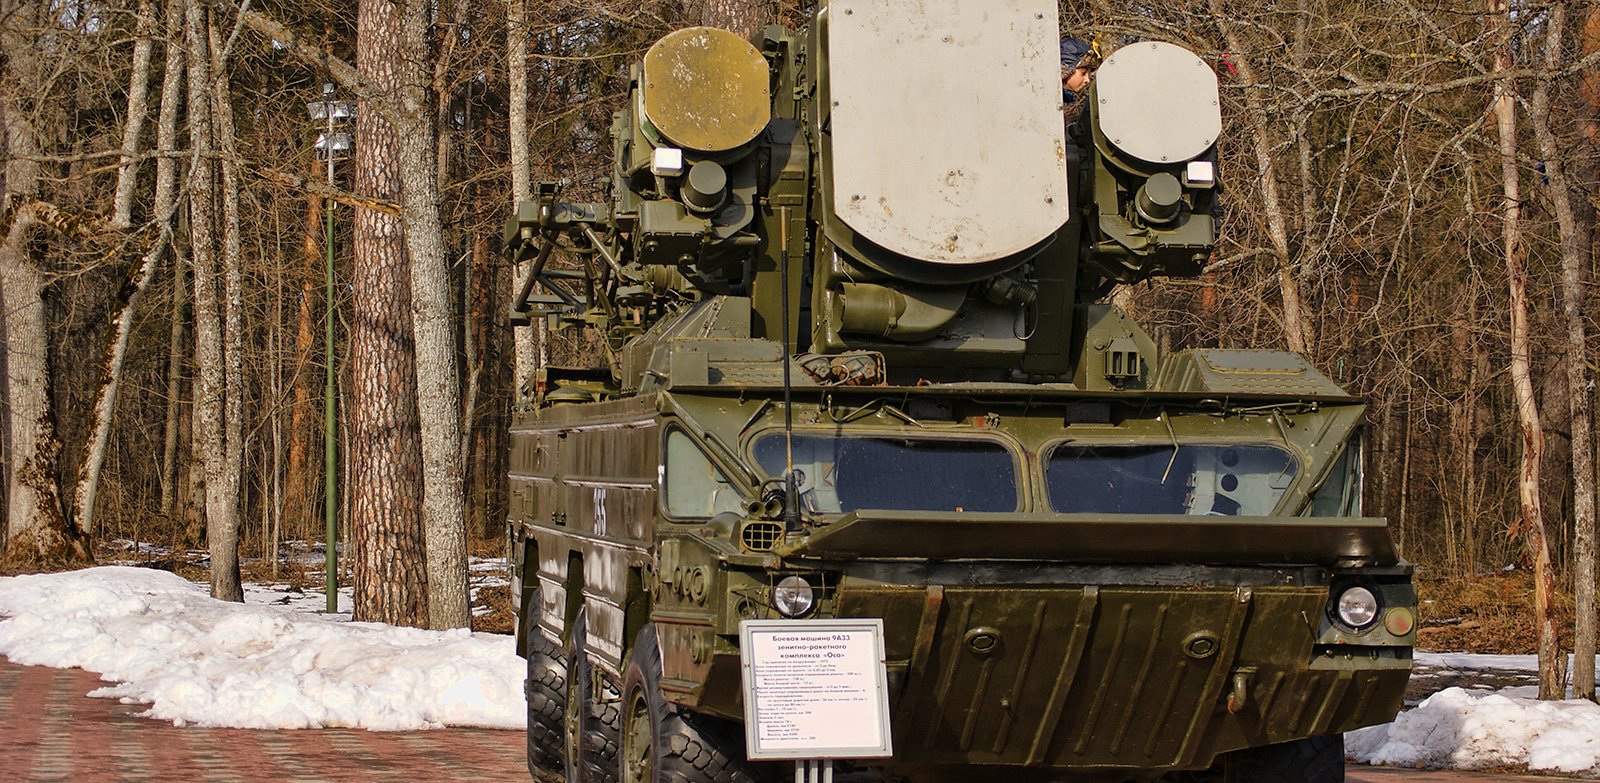 Машина комплекса ПВО "ОКА"